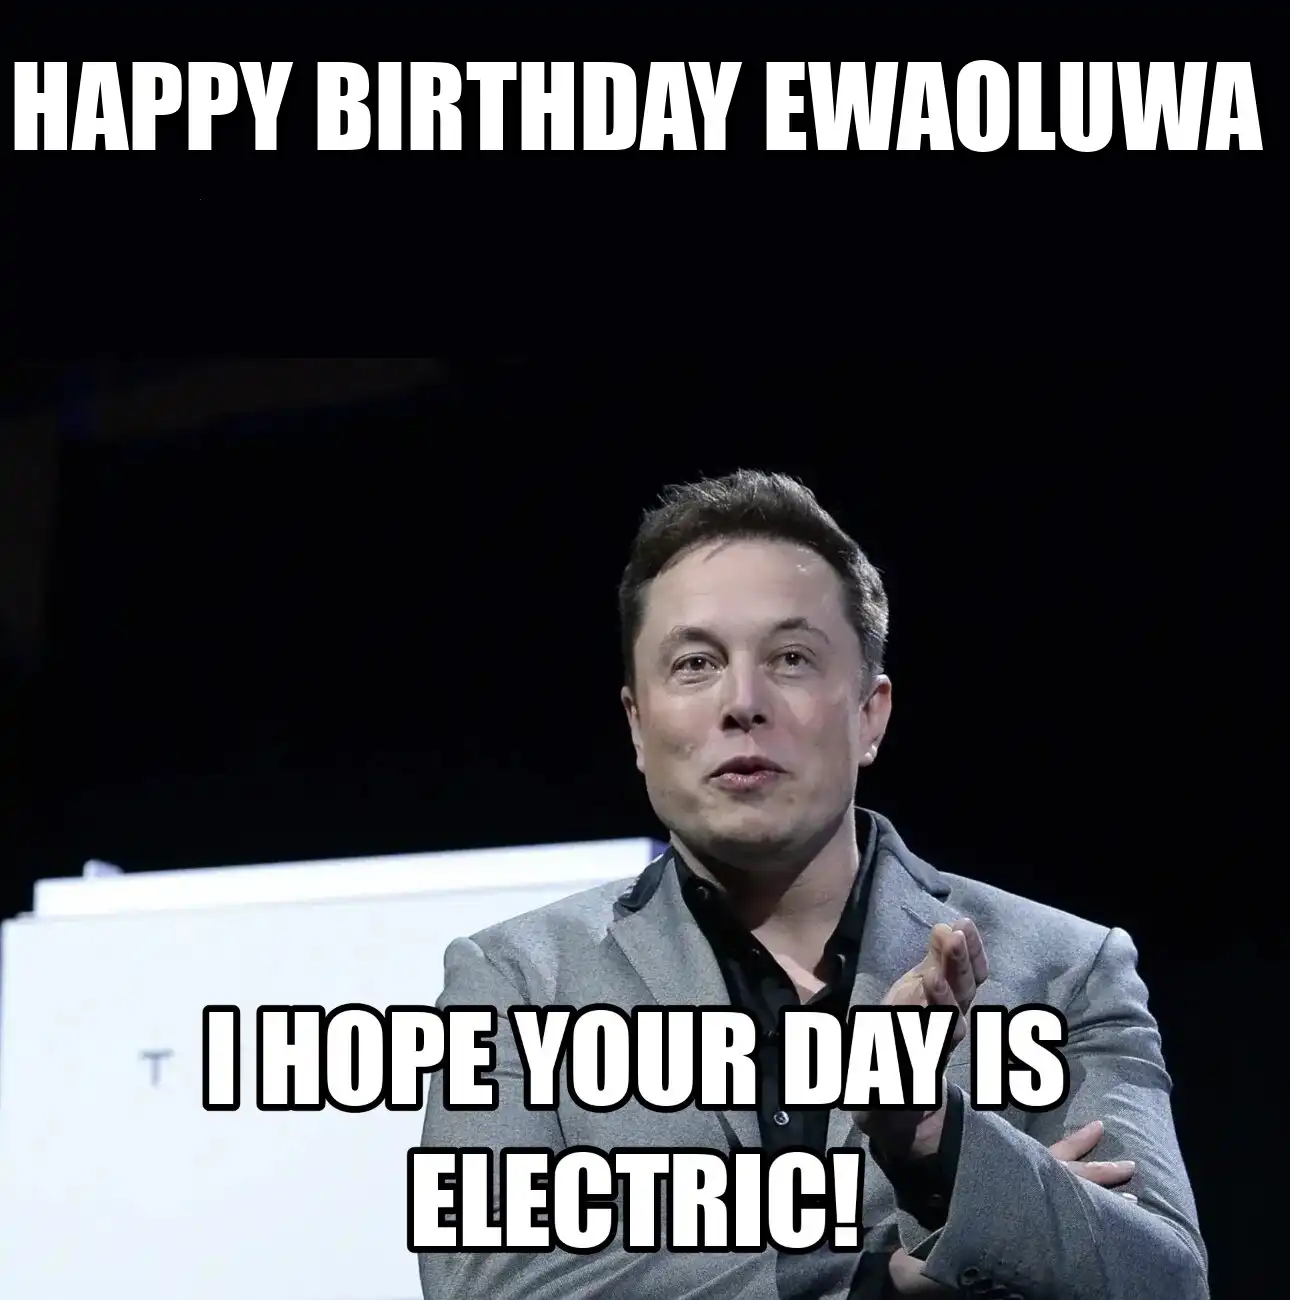 Happy Birthday Ewaoluwa I Hope Your Day Is Electric Meme